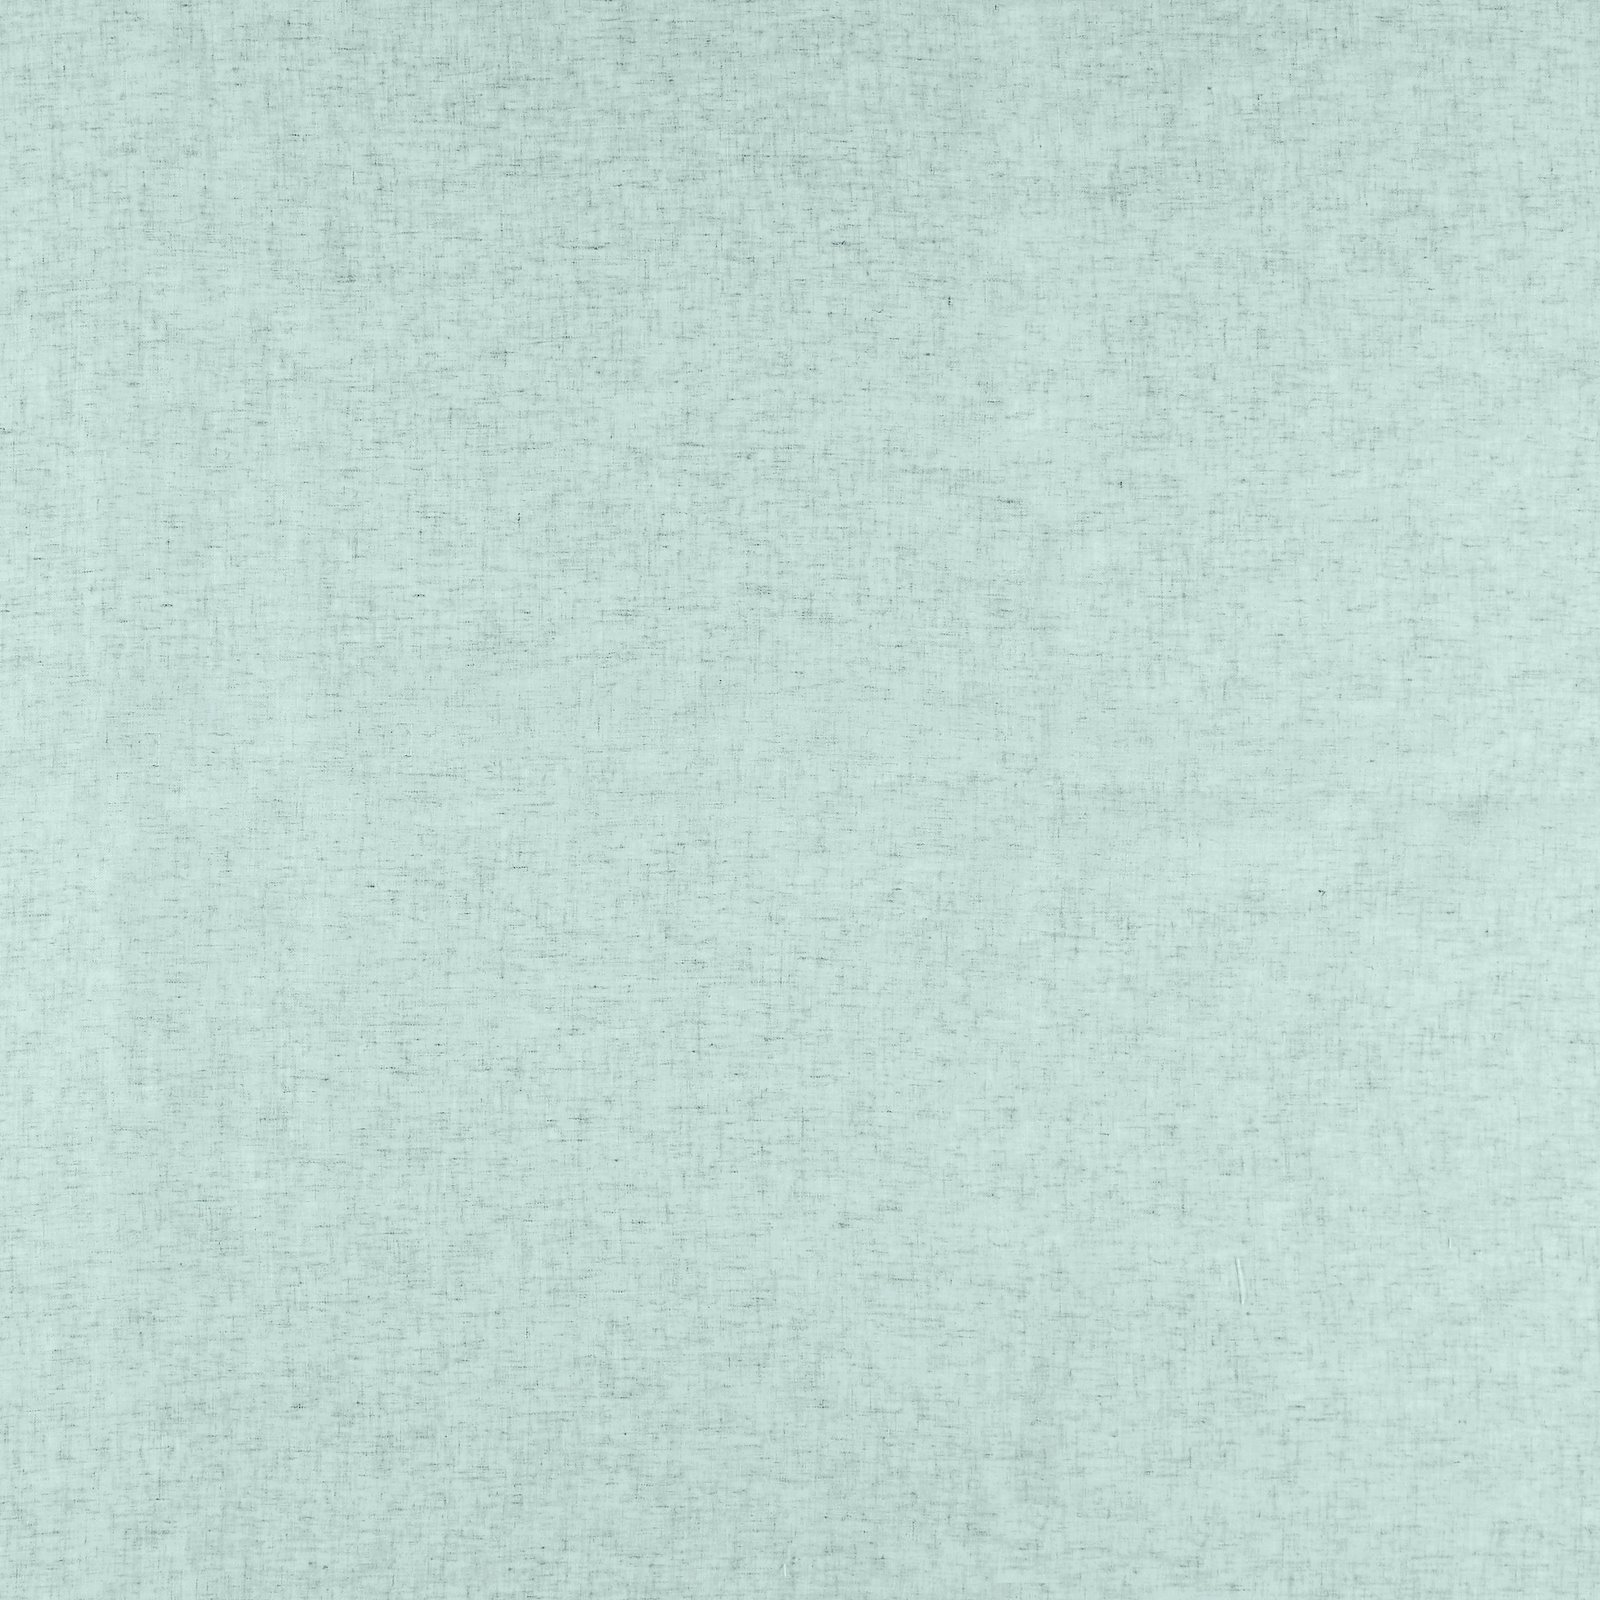 Voile light grey blue polyester/linen blend 835188_pack_solid